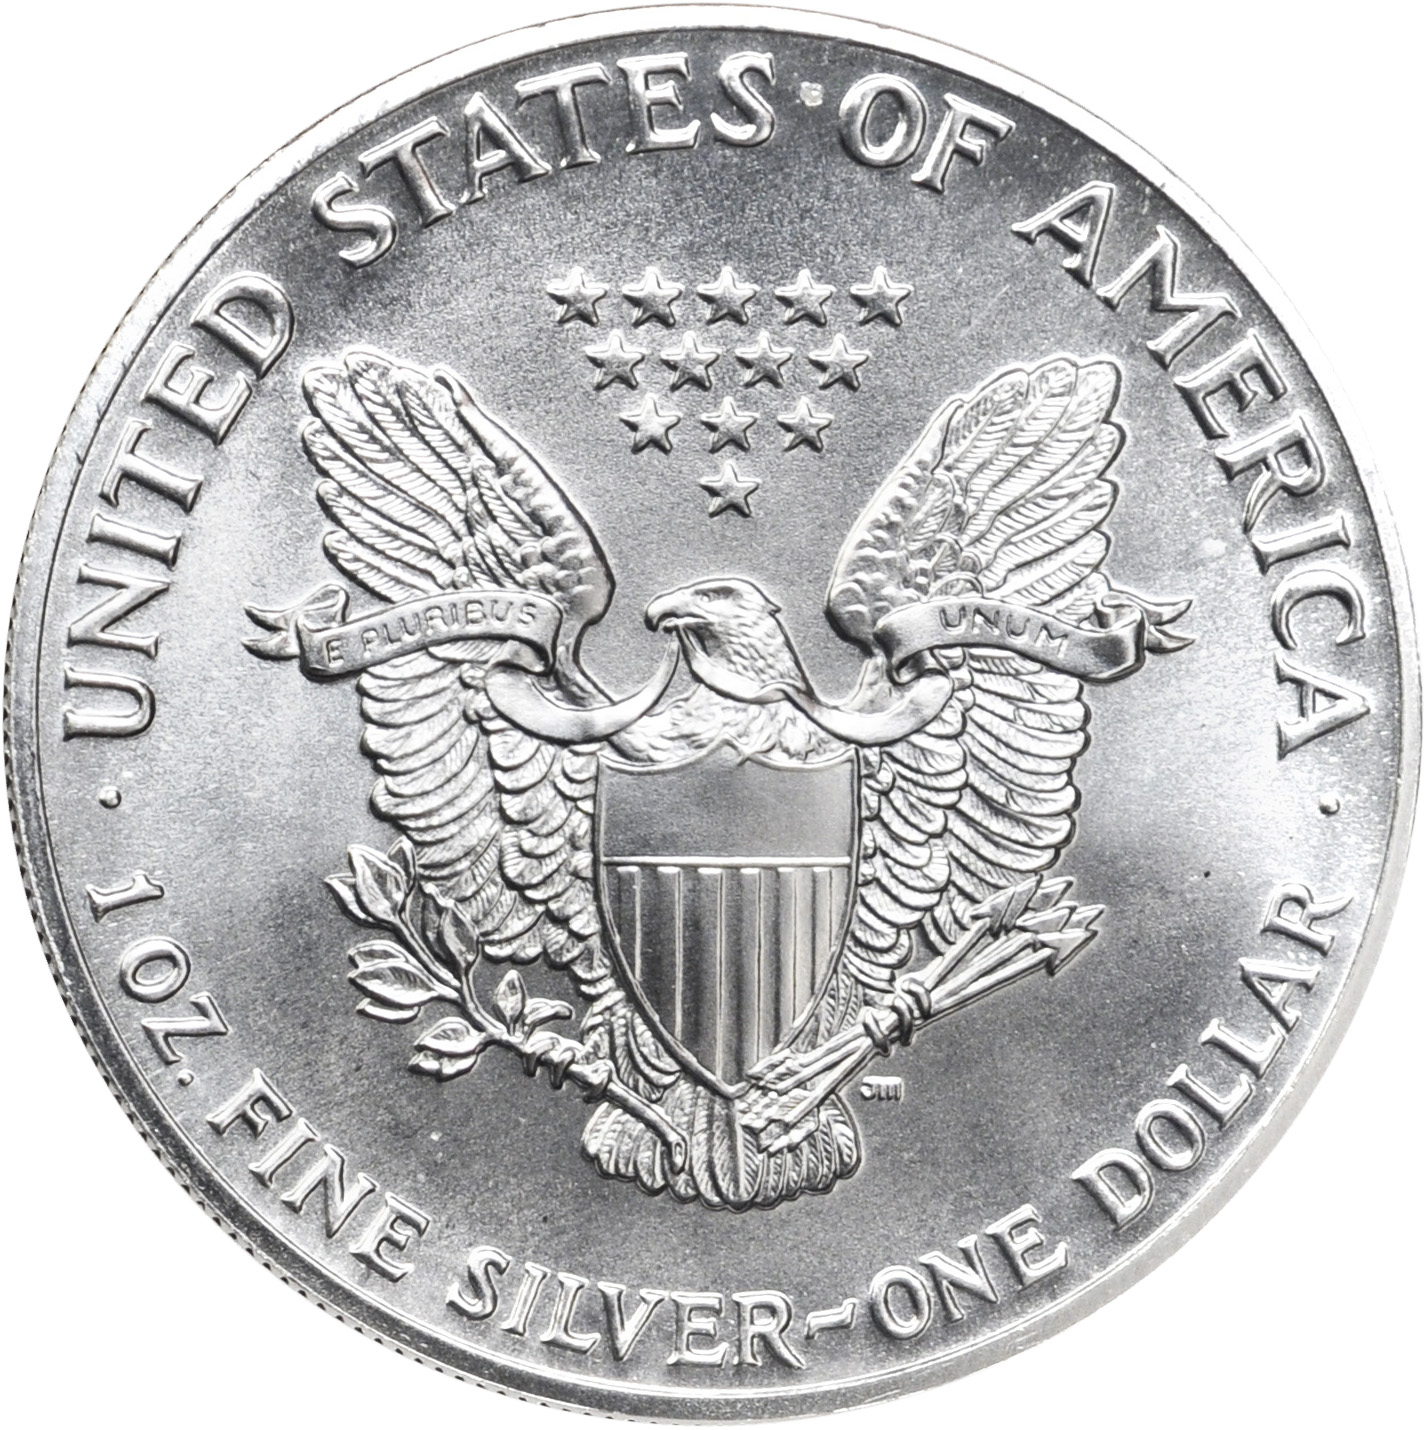 Value of 1989 $1 Silver Coin | American Silver Eagle Coin